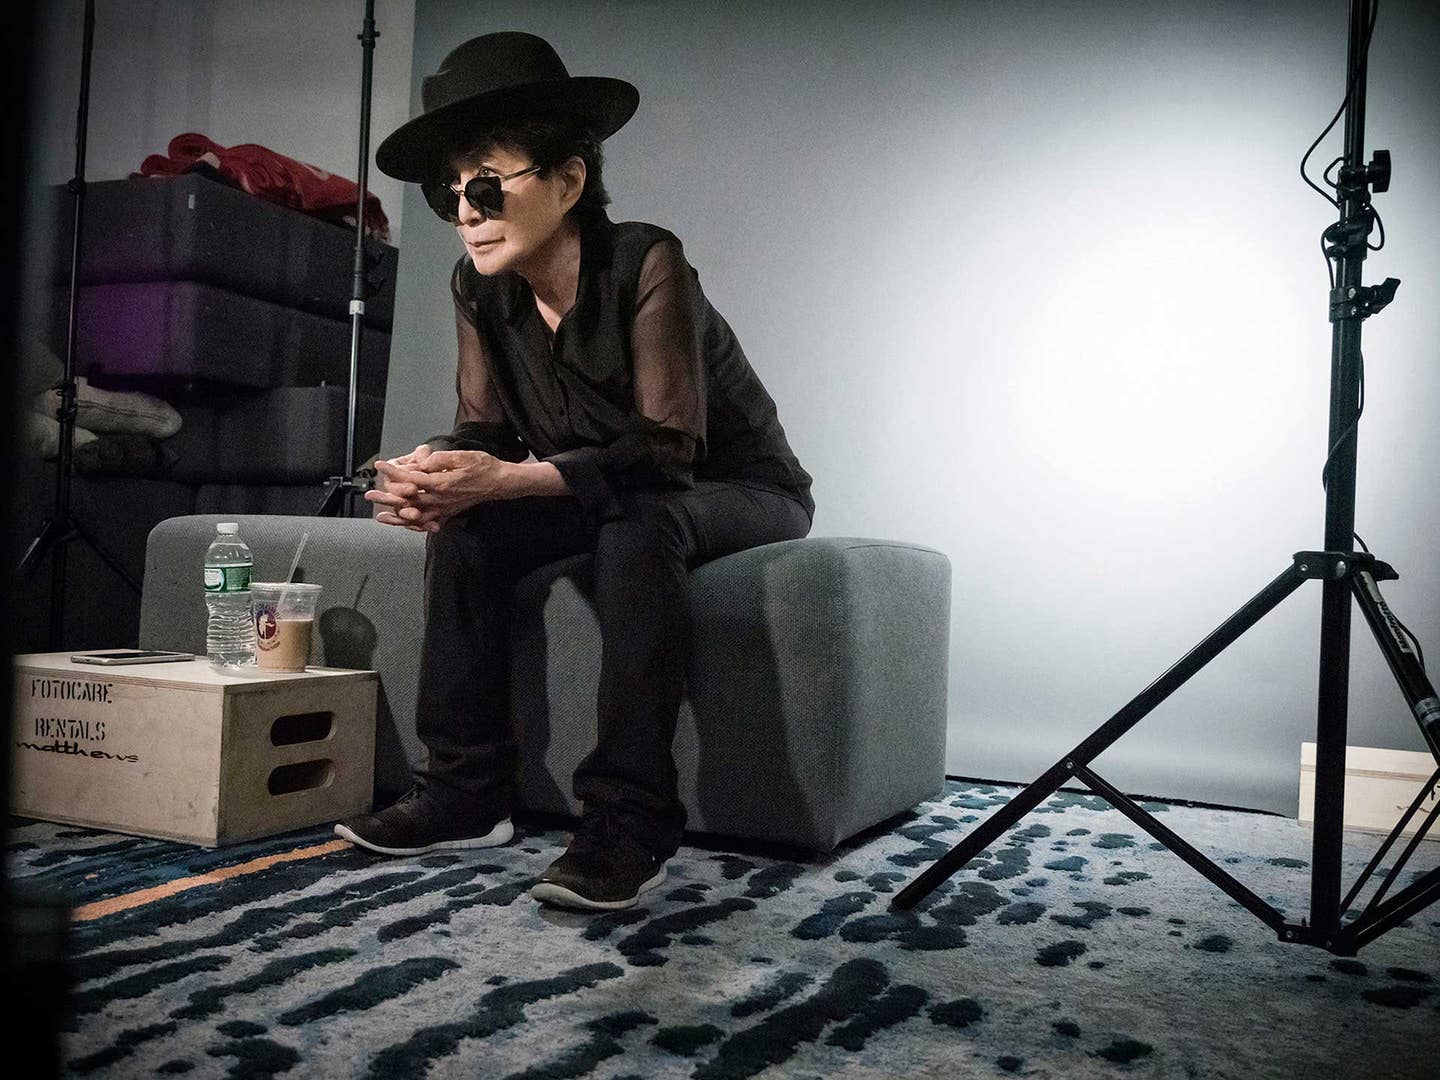 Artist/Musician Yoko Ono